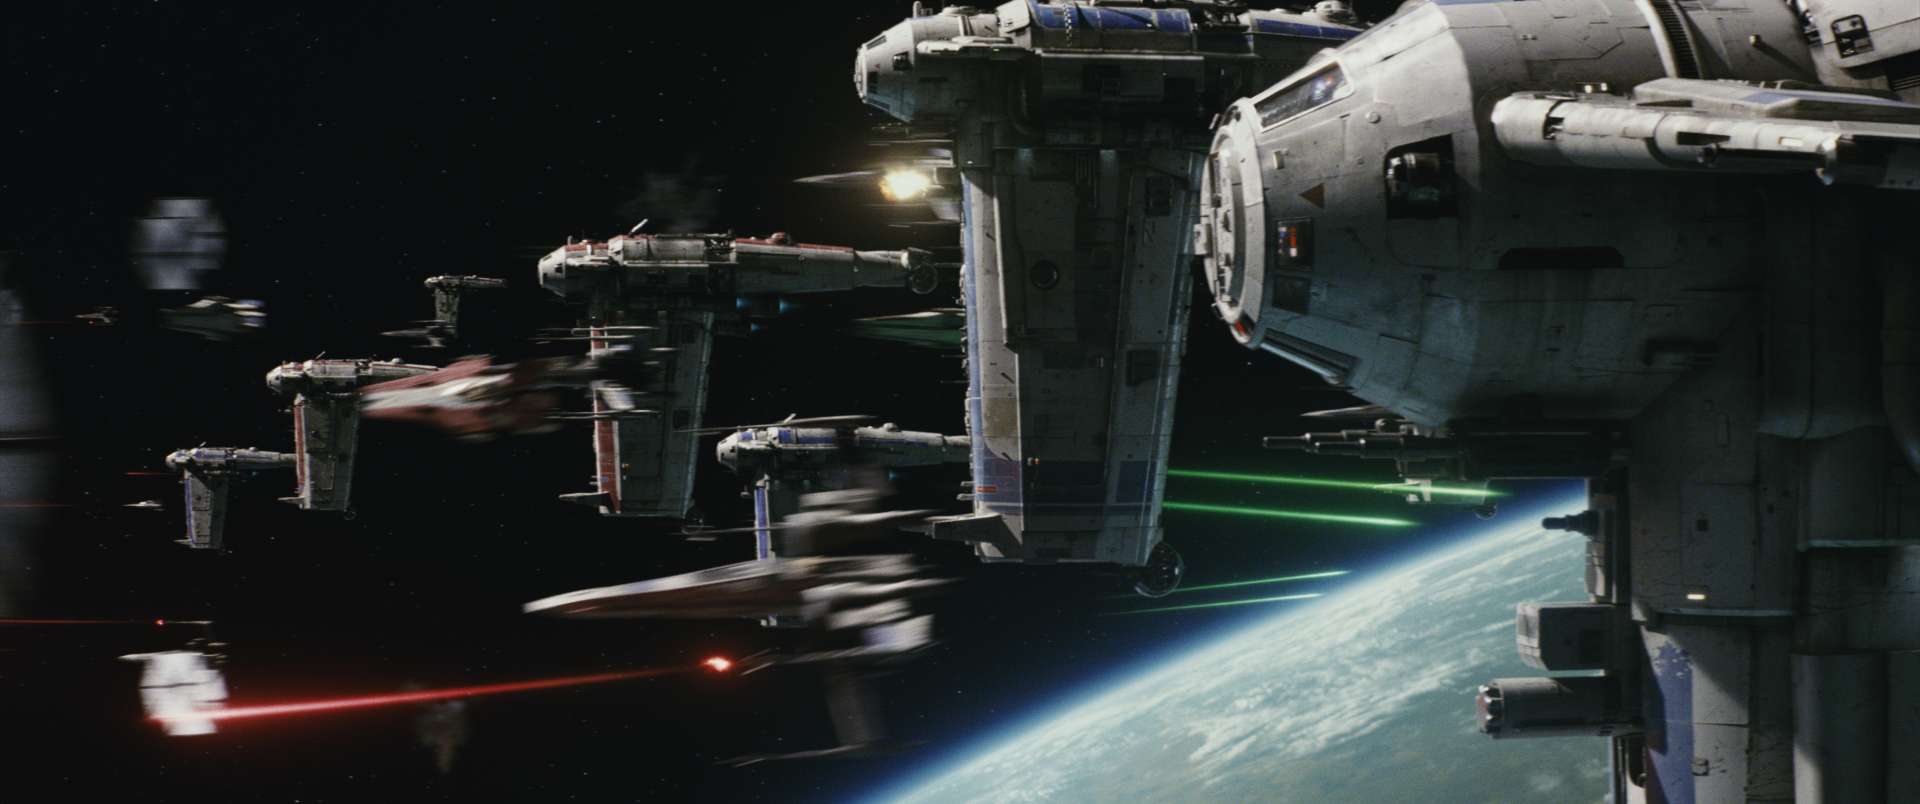 Plik:The Last Jedi Space Battle.jpg